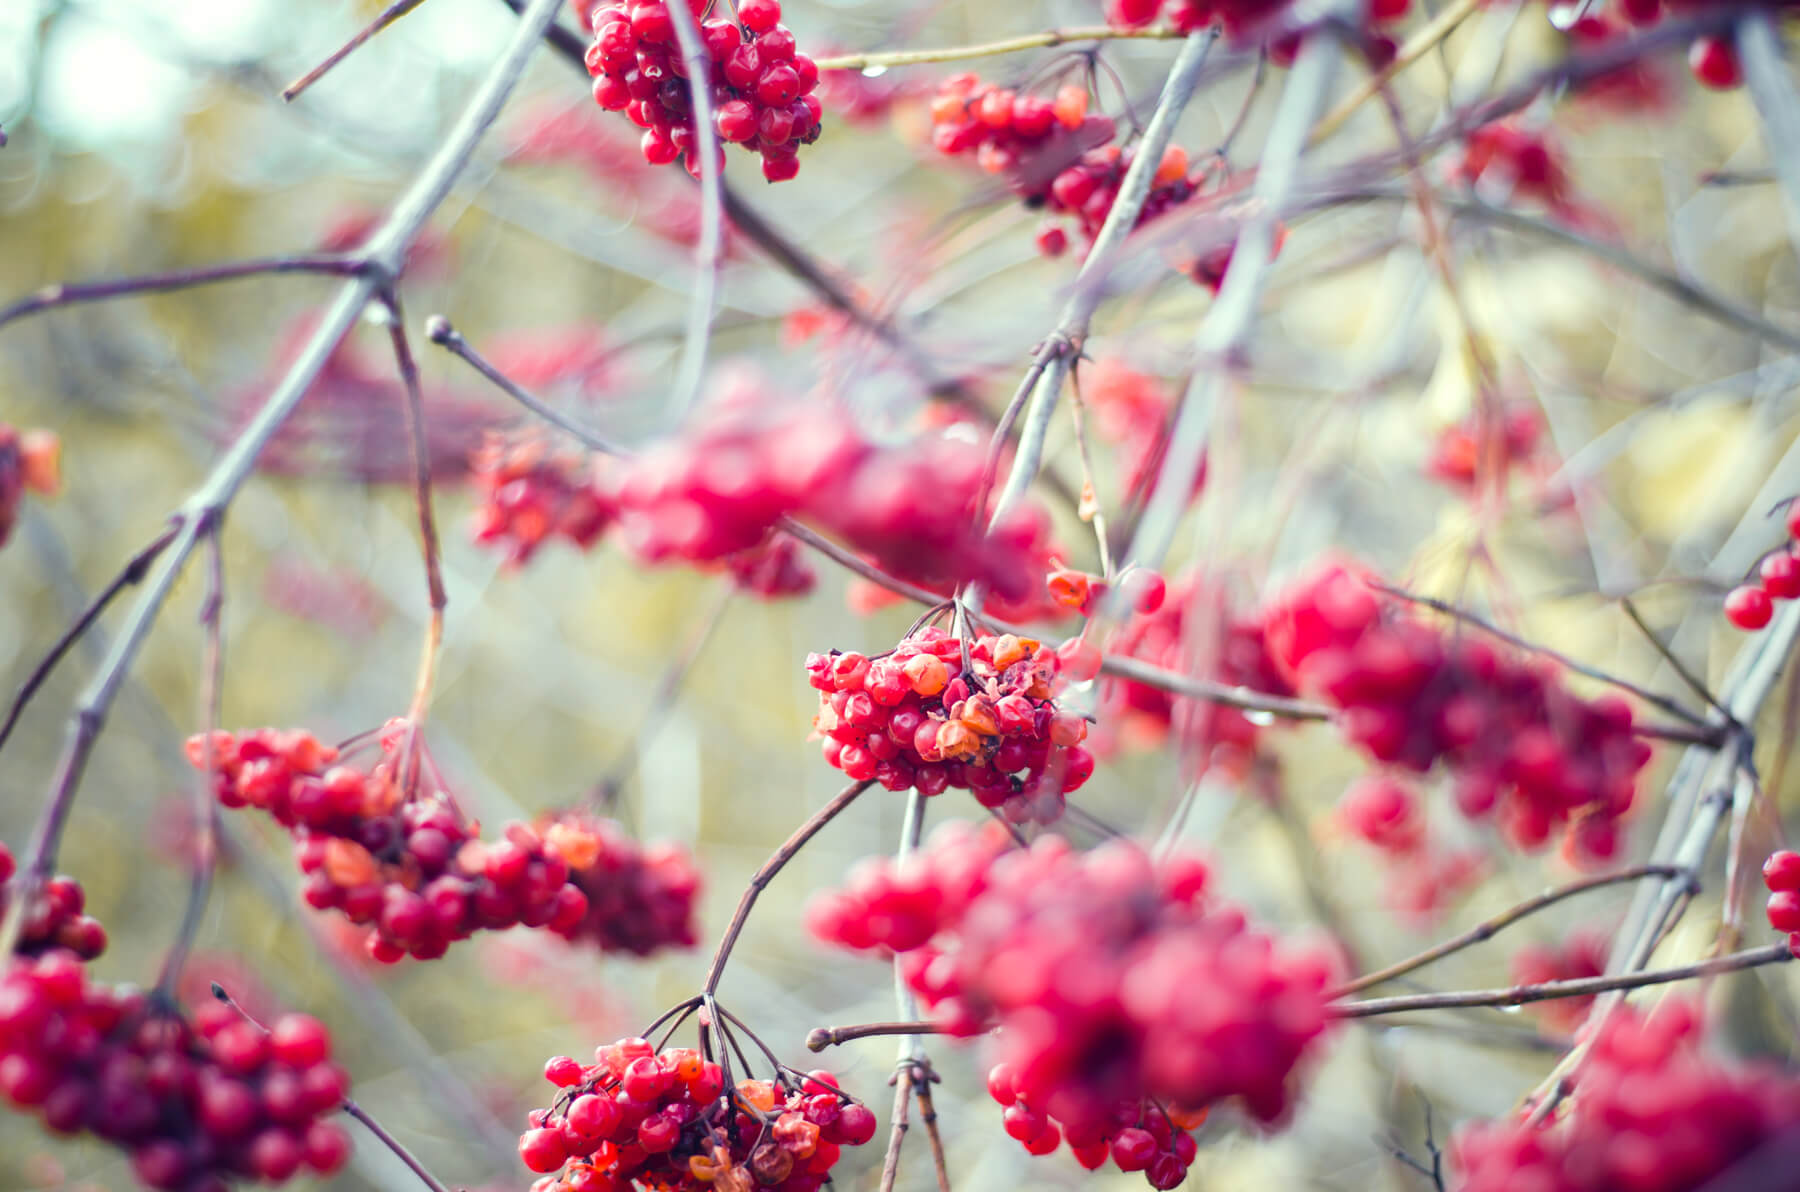 Cranberry | Gepersonaliseerde vitamines